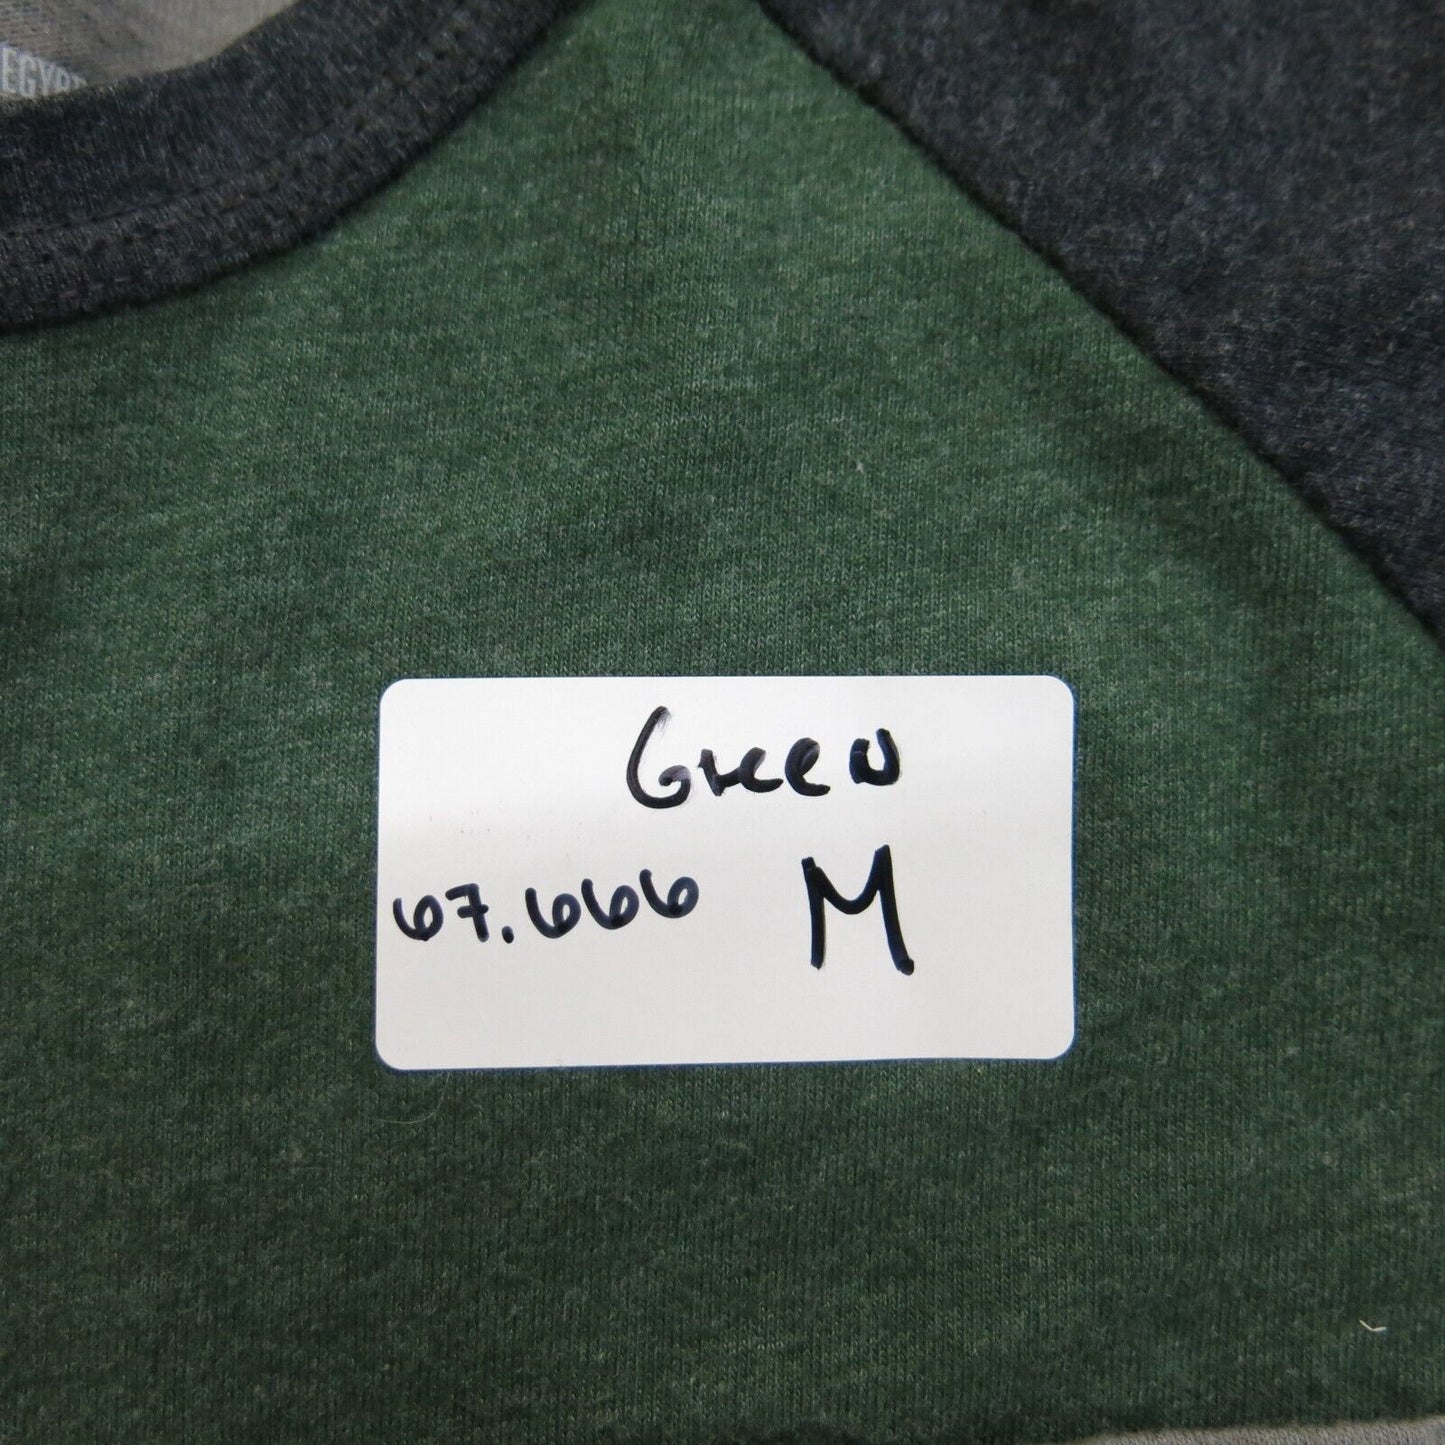 Levi Struss & Co Mens Long Sleeve Shirts Crew Neck Pocket Green Gray Size Medium